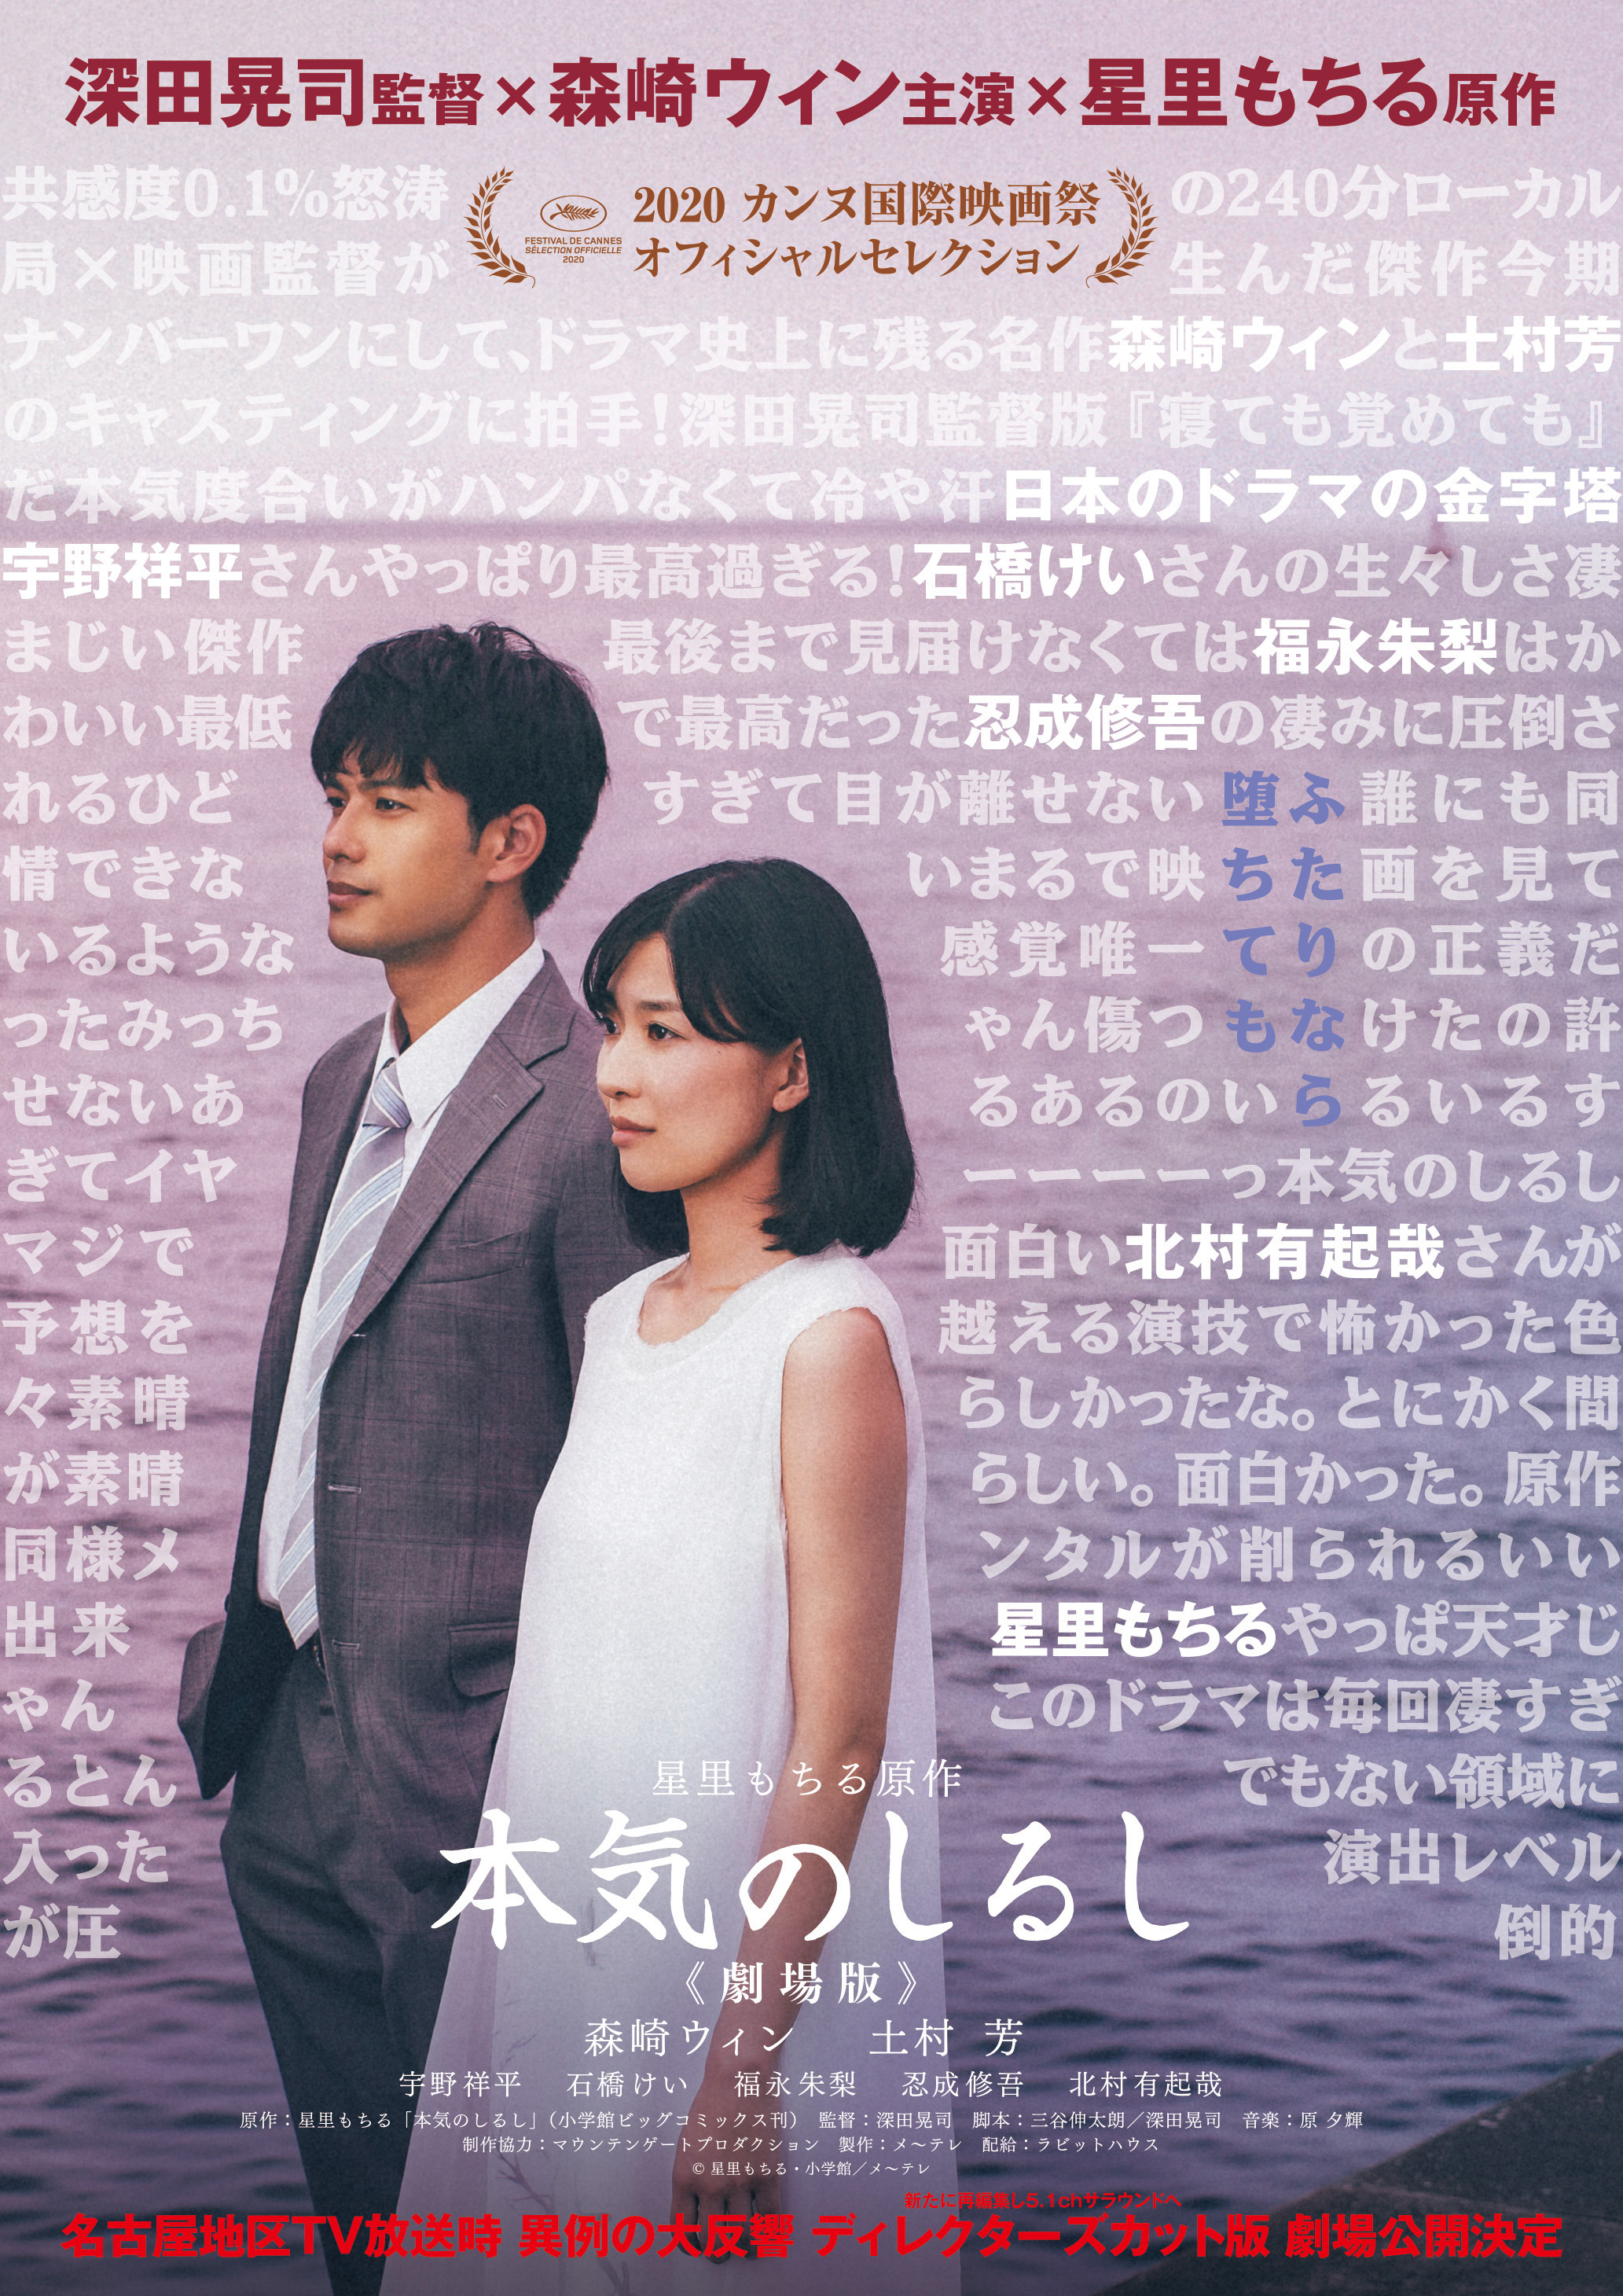 Mega Sized Movie Poster Image for Honki no shirushi: Gekijôban (#1 of 3)